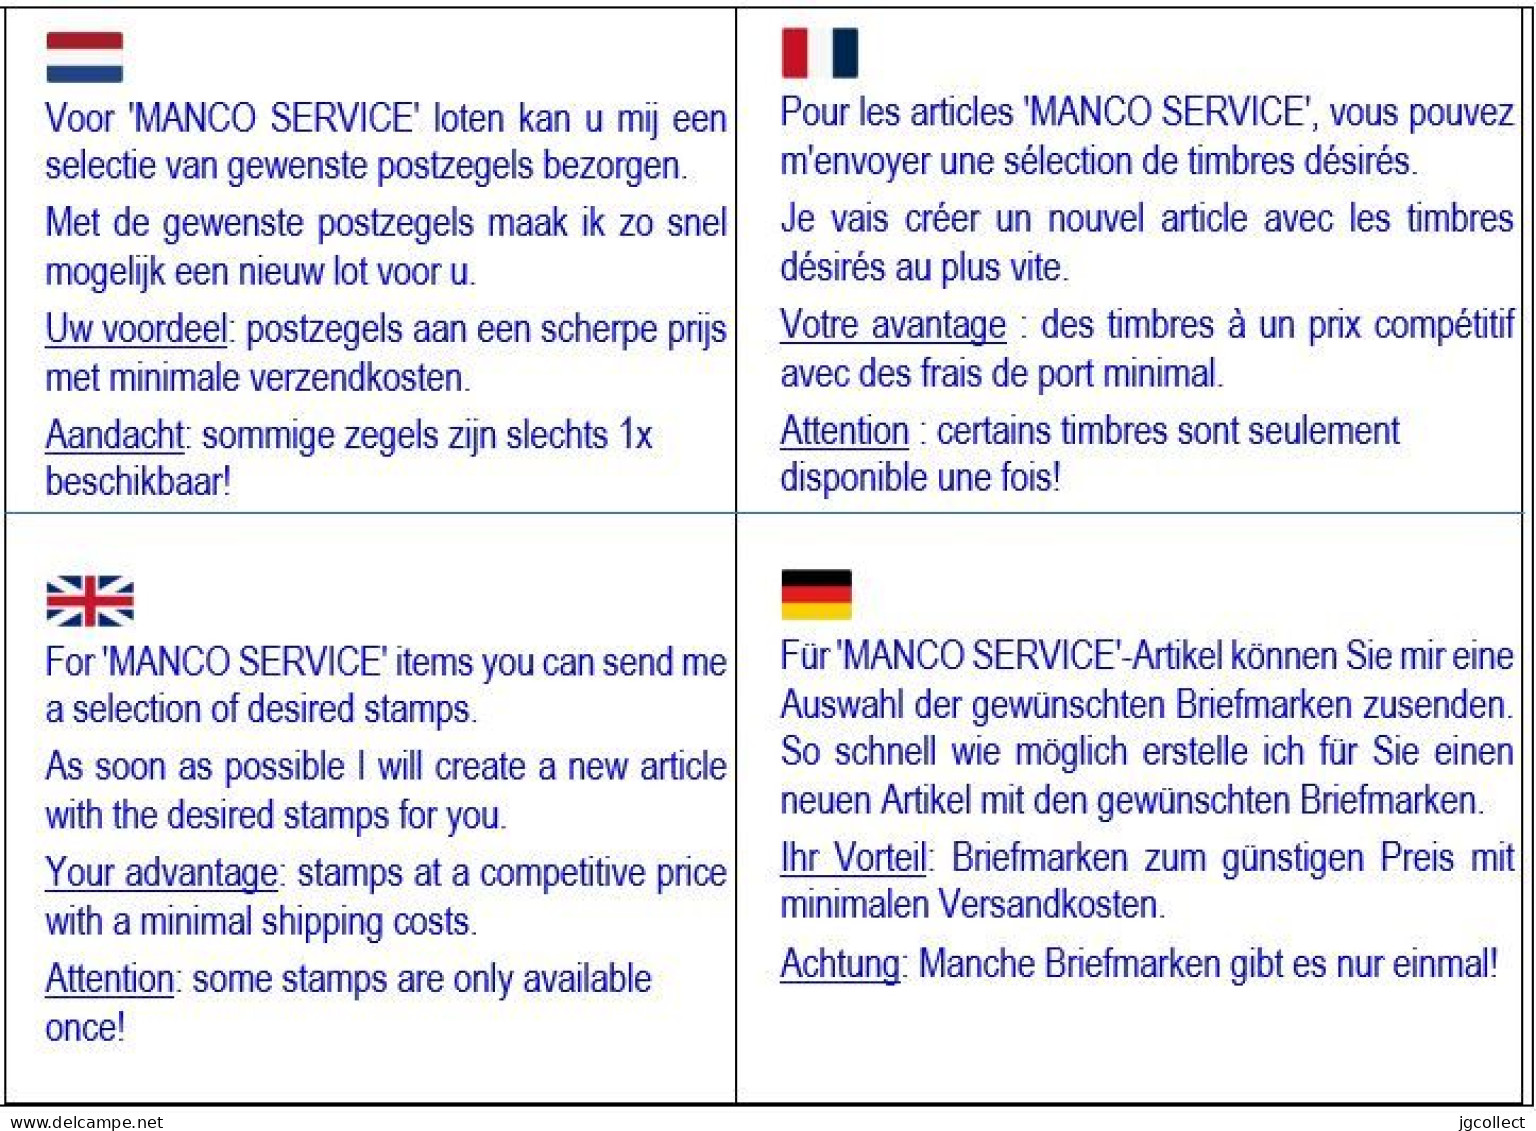 MANCO Service: Typografisch 1922-26 Albert I - Typo Precancels 1922-26 (Albert I)